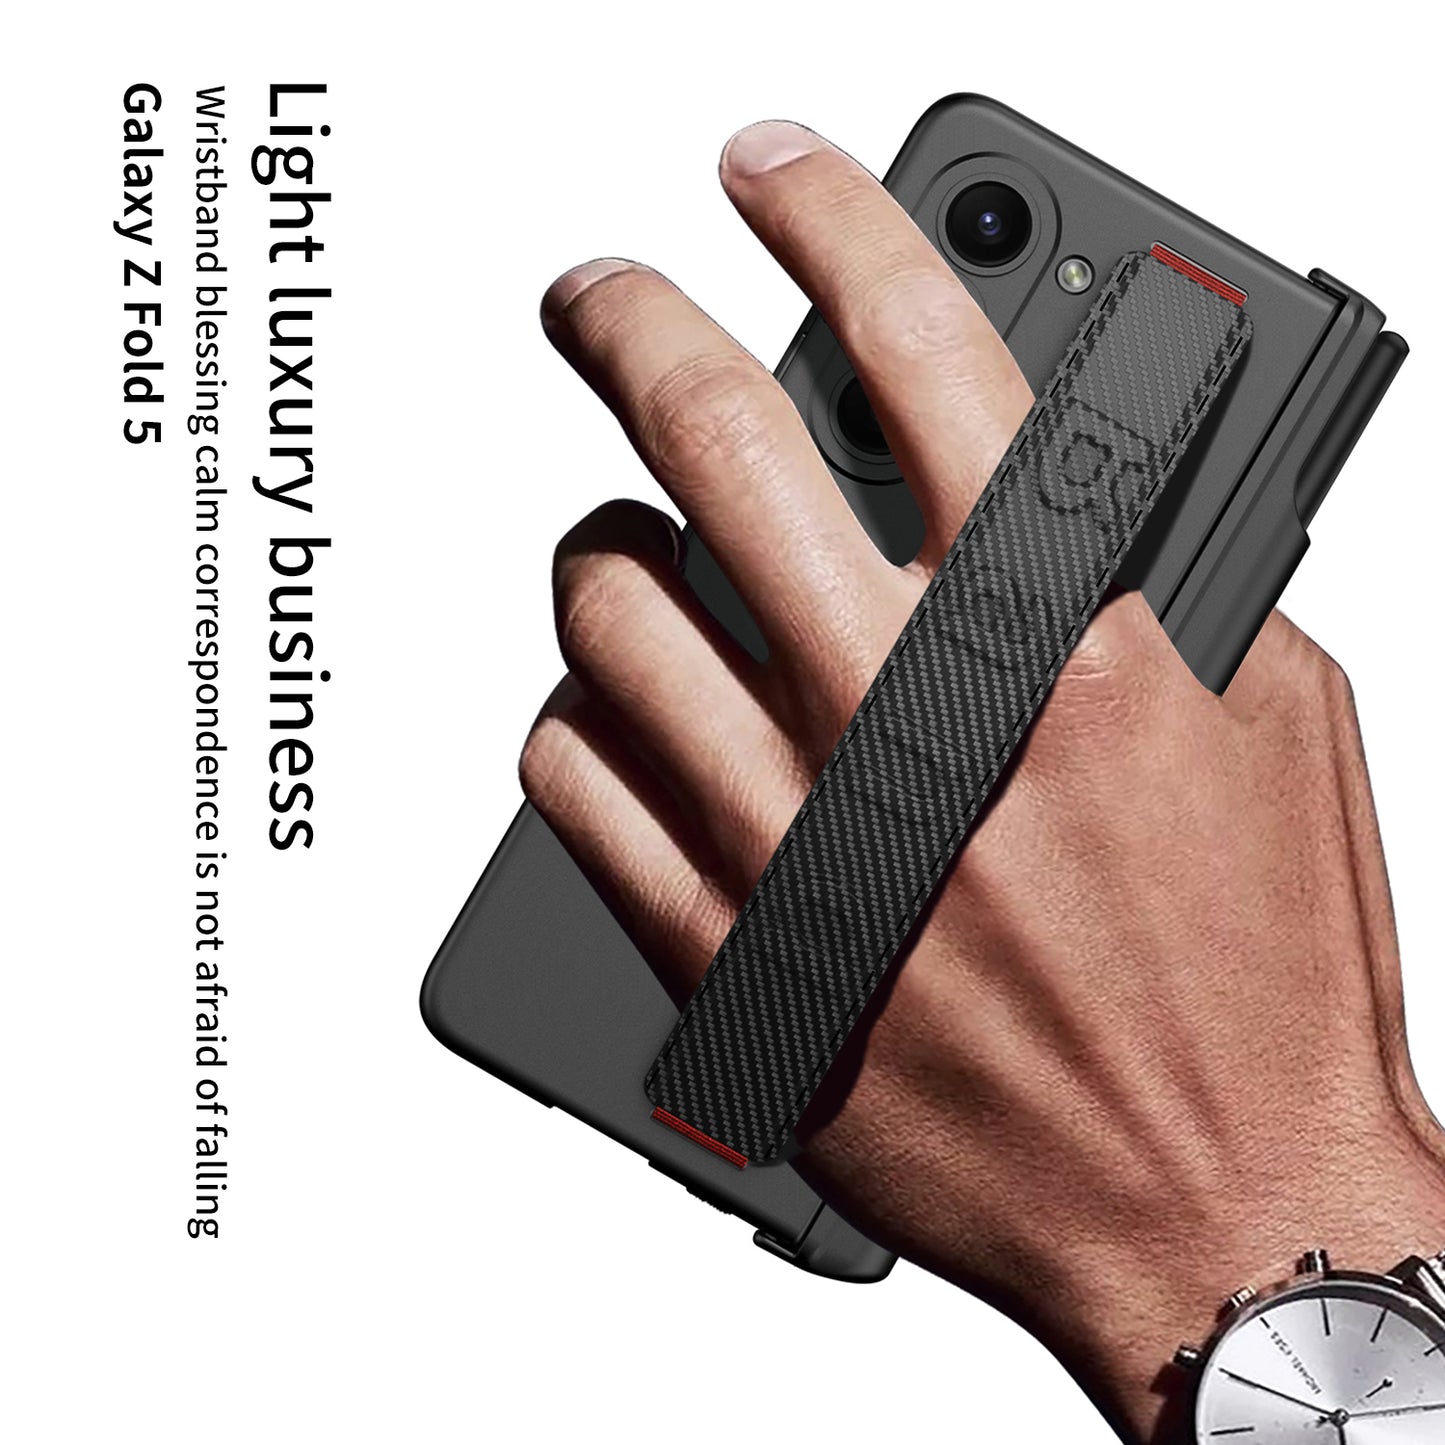 Magnetic Hinge Pen Slot Wristband Holder Phone Case With Back Screen Protector For Samsung Galaxy Z Fold5 Fold4 Fold3 - mycasety2023 Mycasety